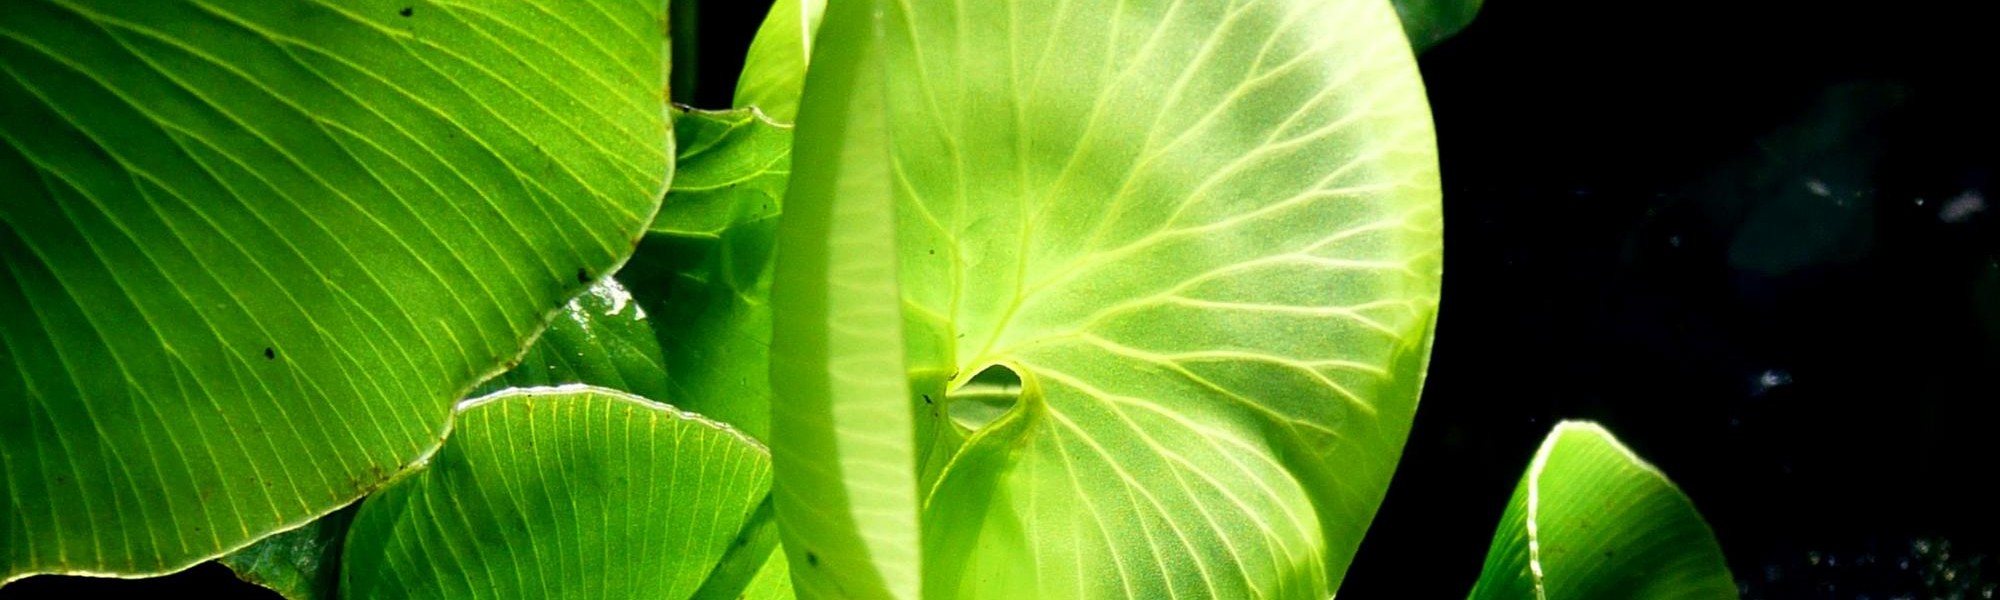 Ferns closeup